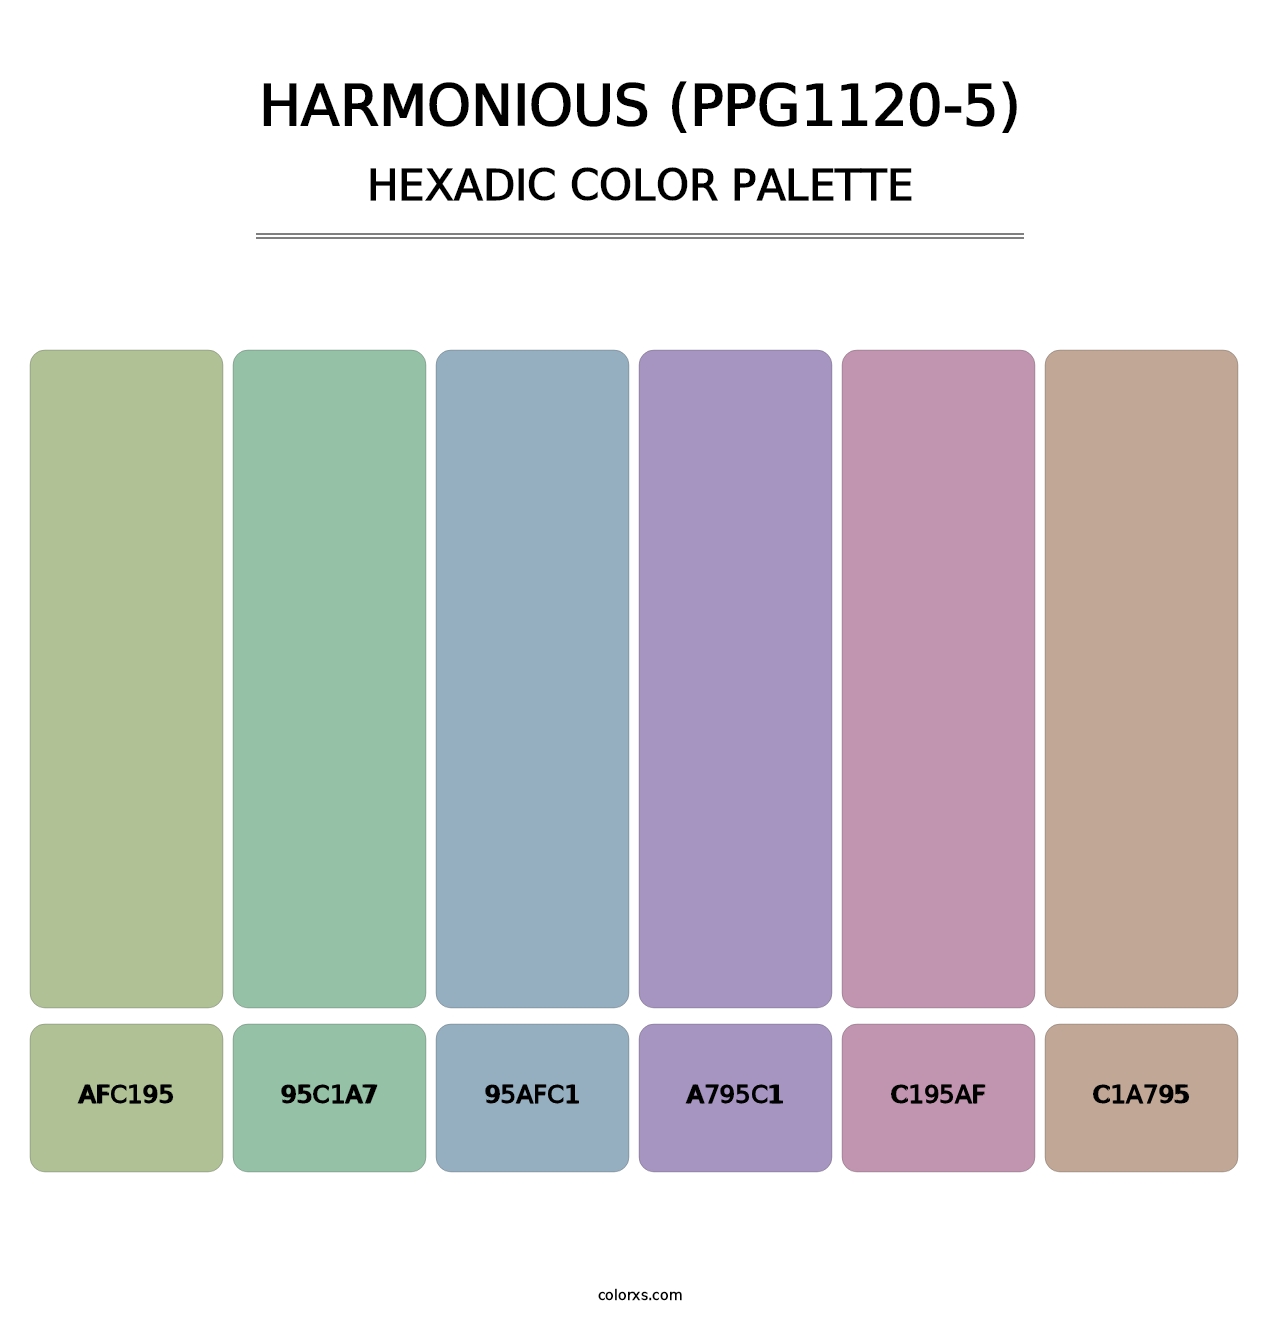 Harmonious (PPG1120-5) - Hexadic Color Palette